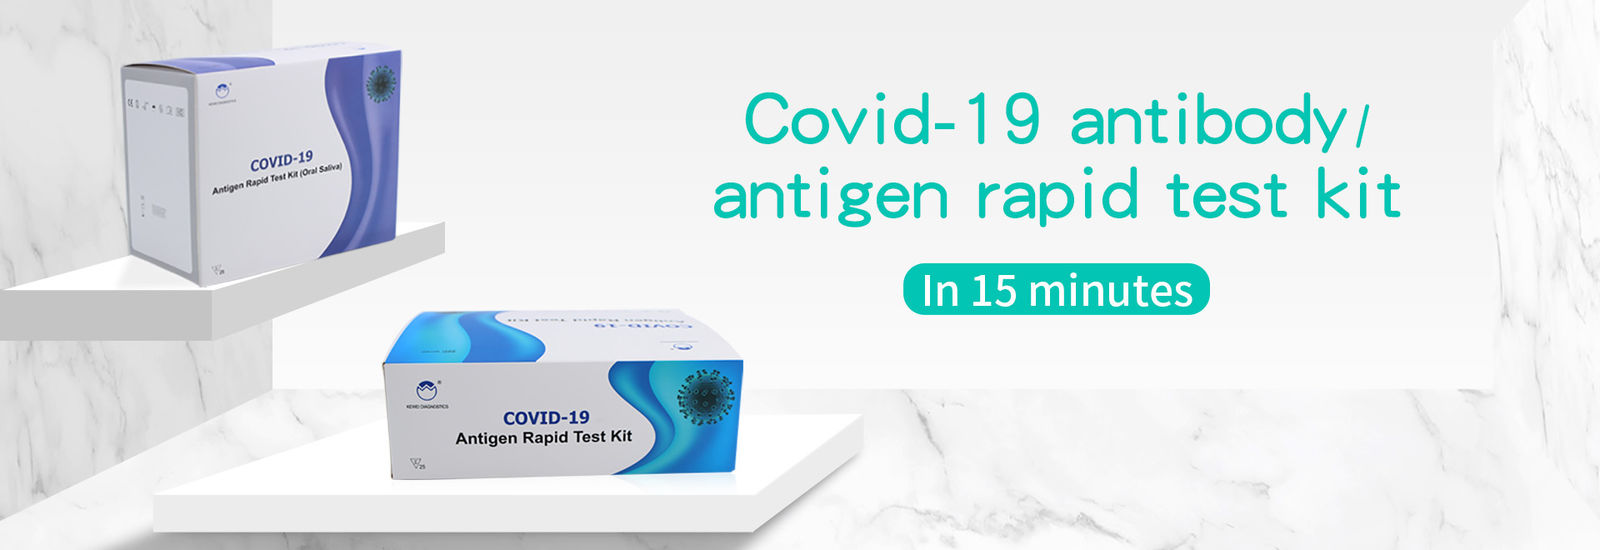 Kit rapide d'essai de l'antigène Covid-19